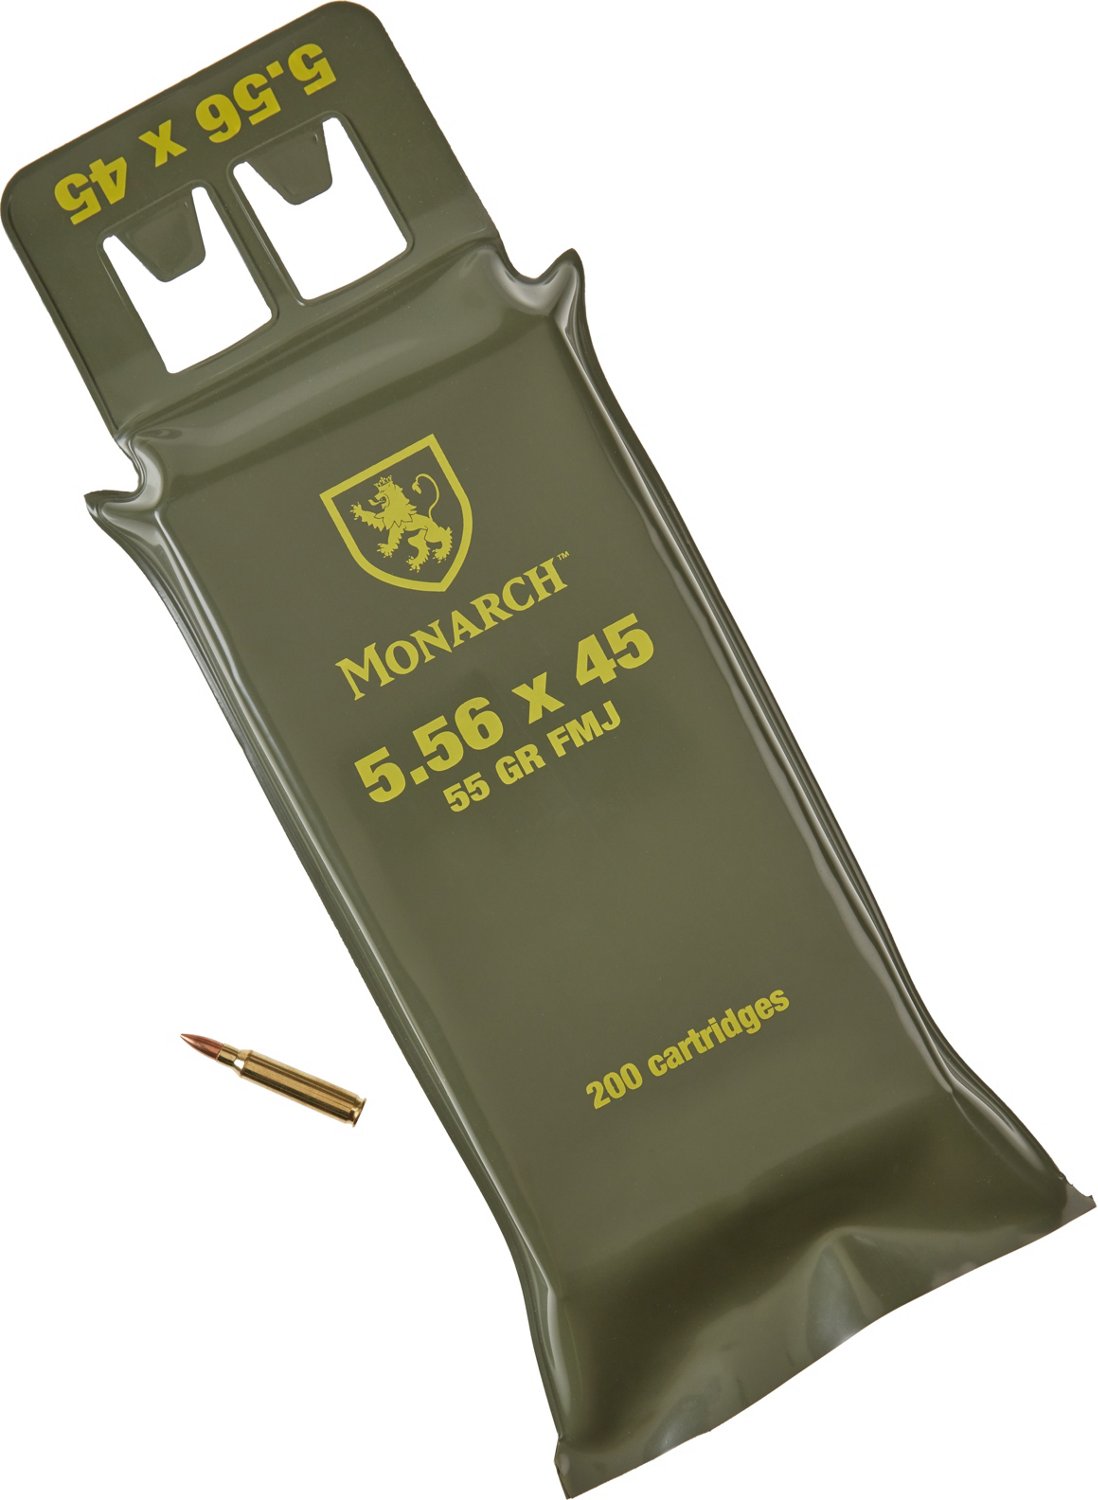 Monarch Battle Pack 5.56 x 45mm NATO 55-Grain Centerfire Rifle Ammunition - 200 Rounds                                           - view number 1 selected